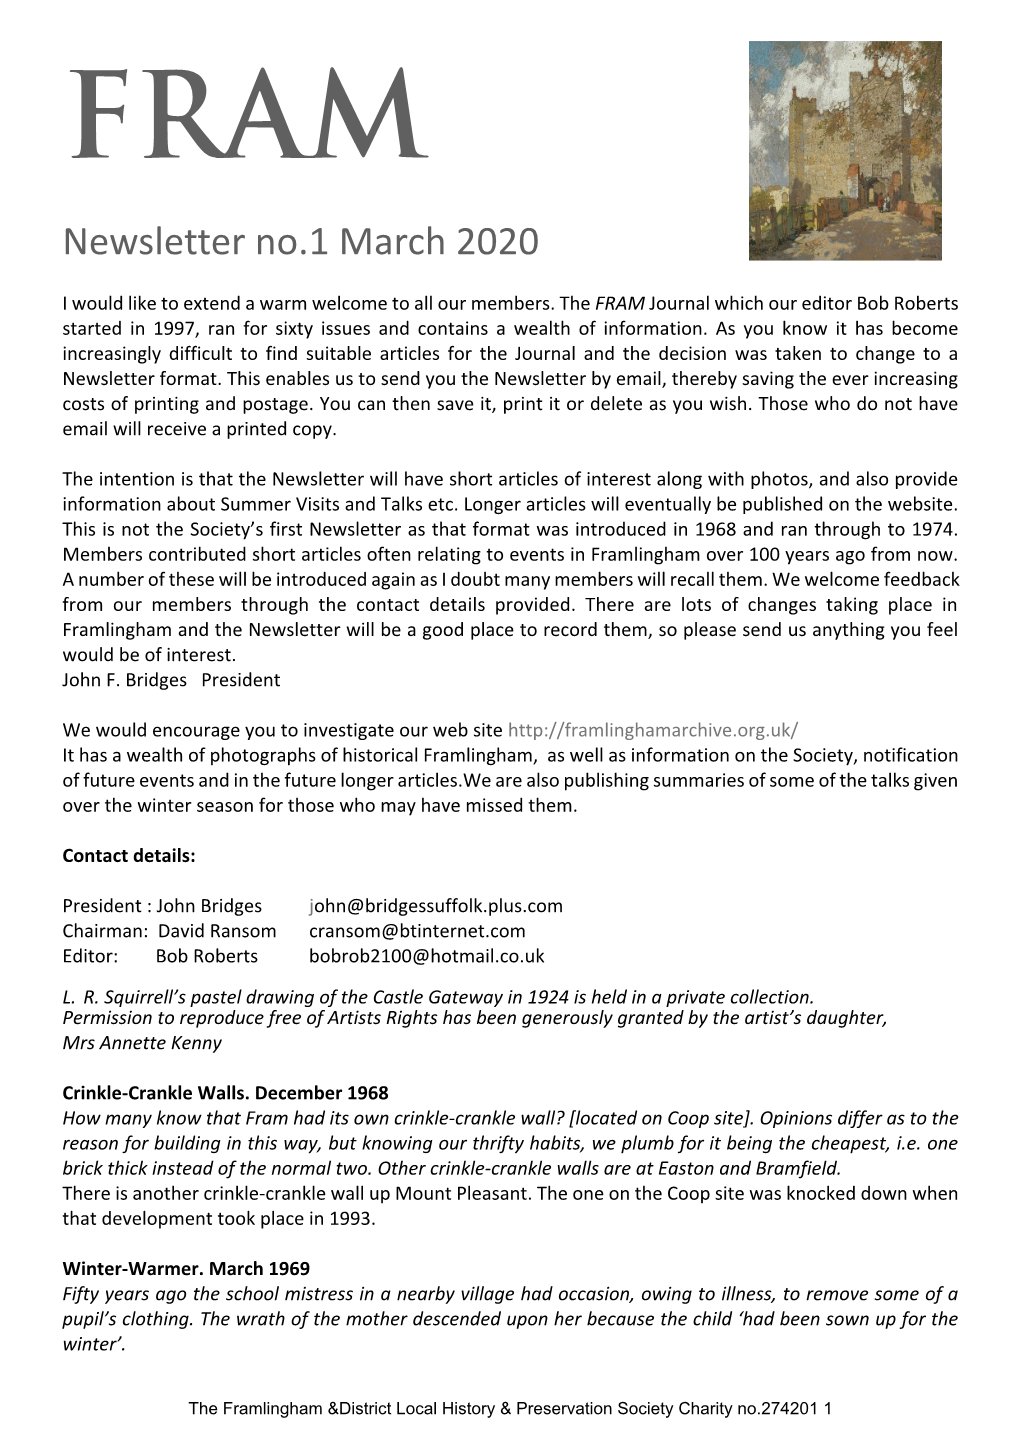 Newsletter 1 – March 2020